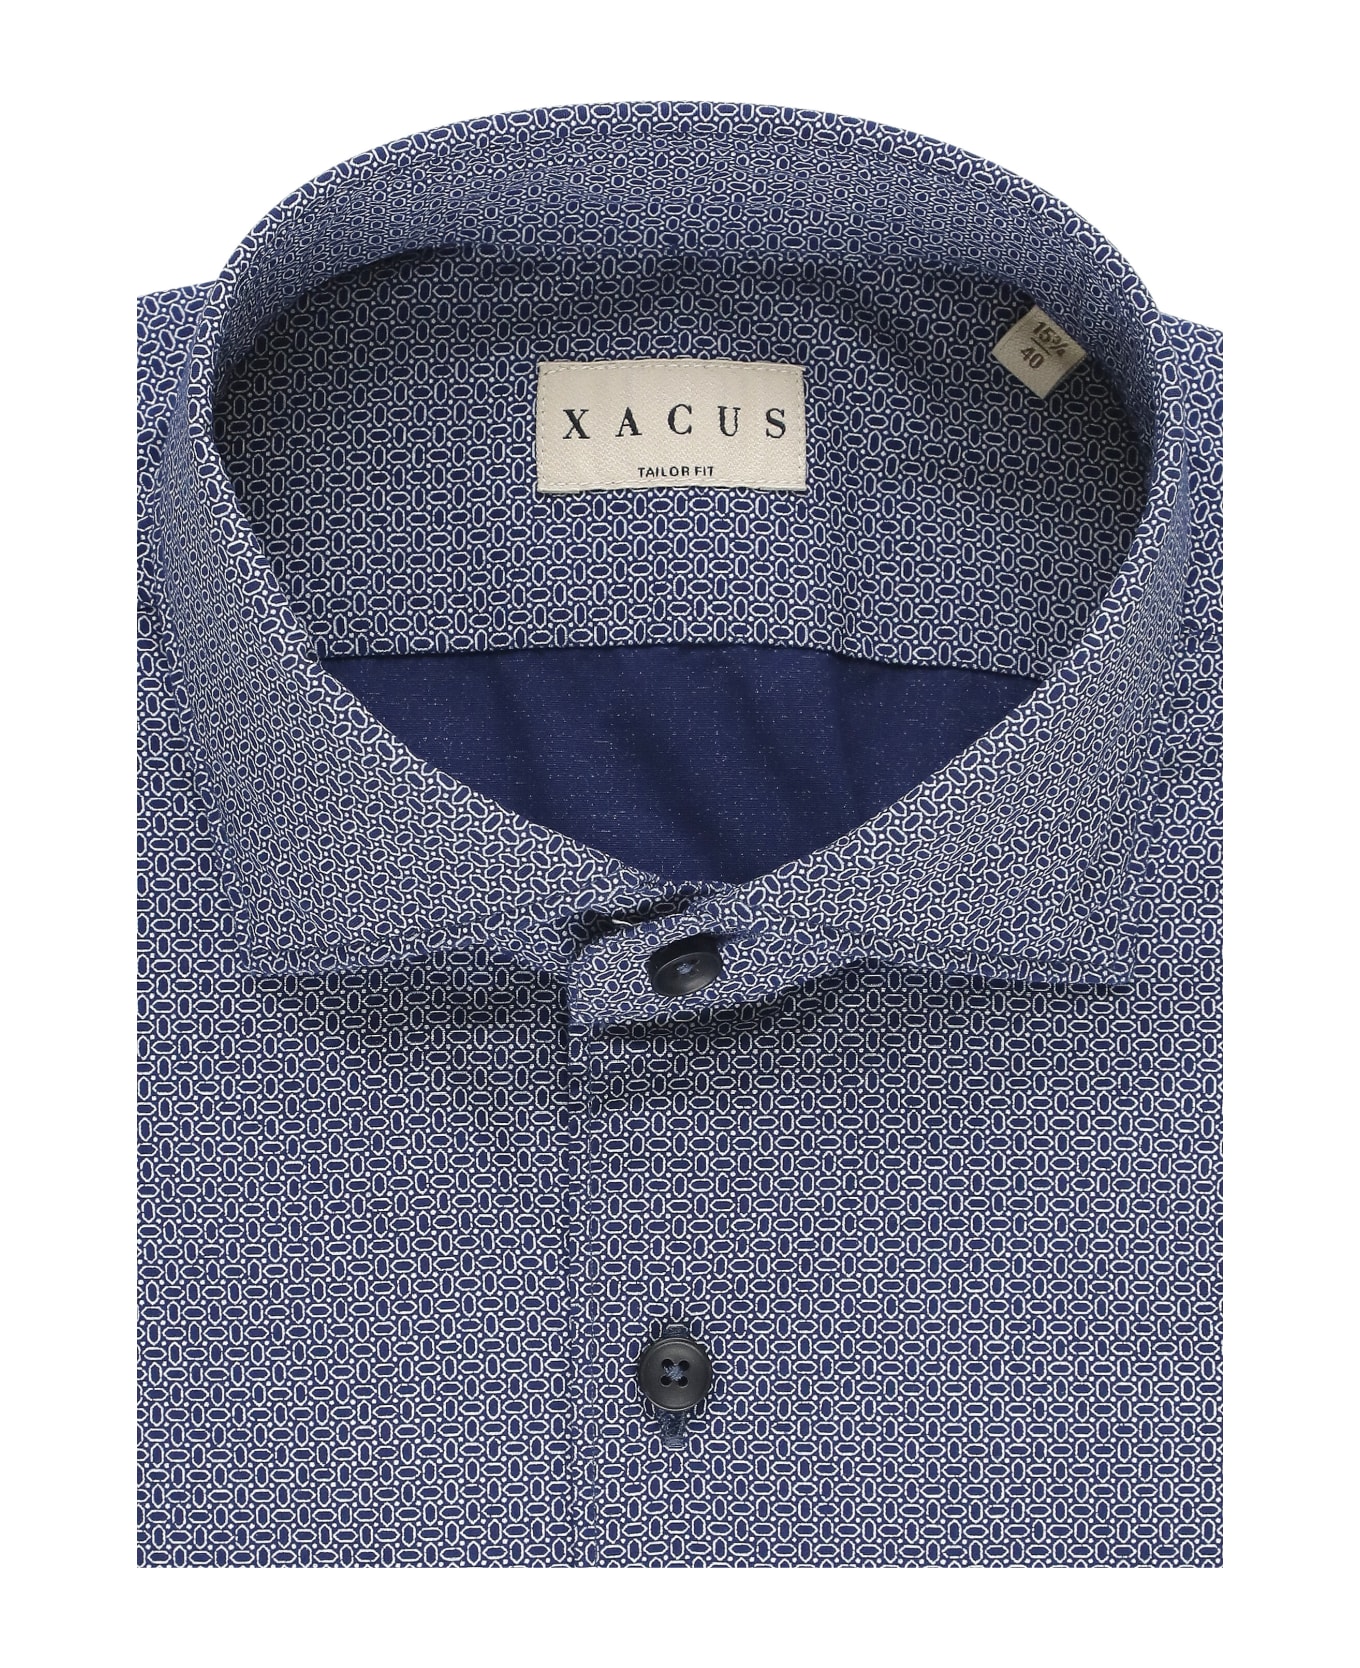 Xacus Tailor Shirt - Blue